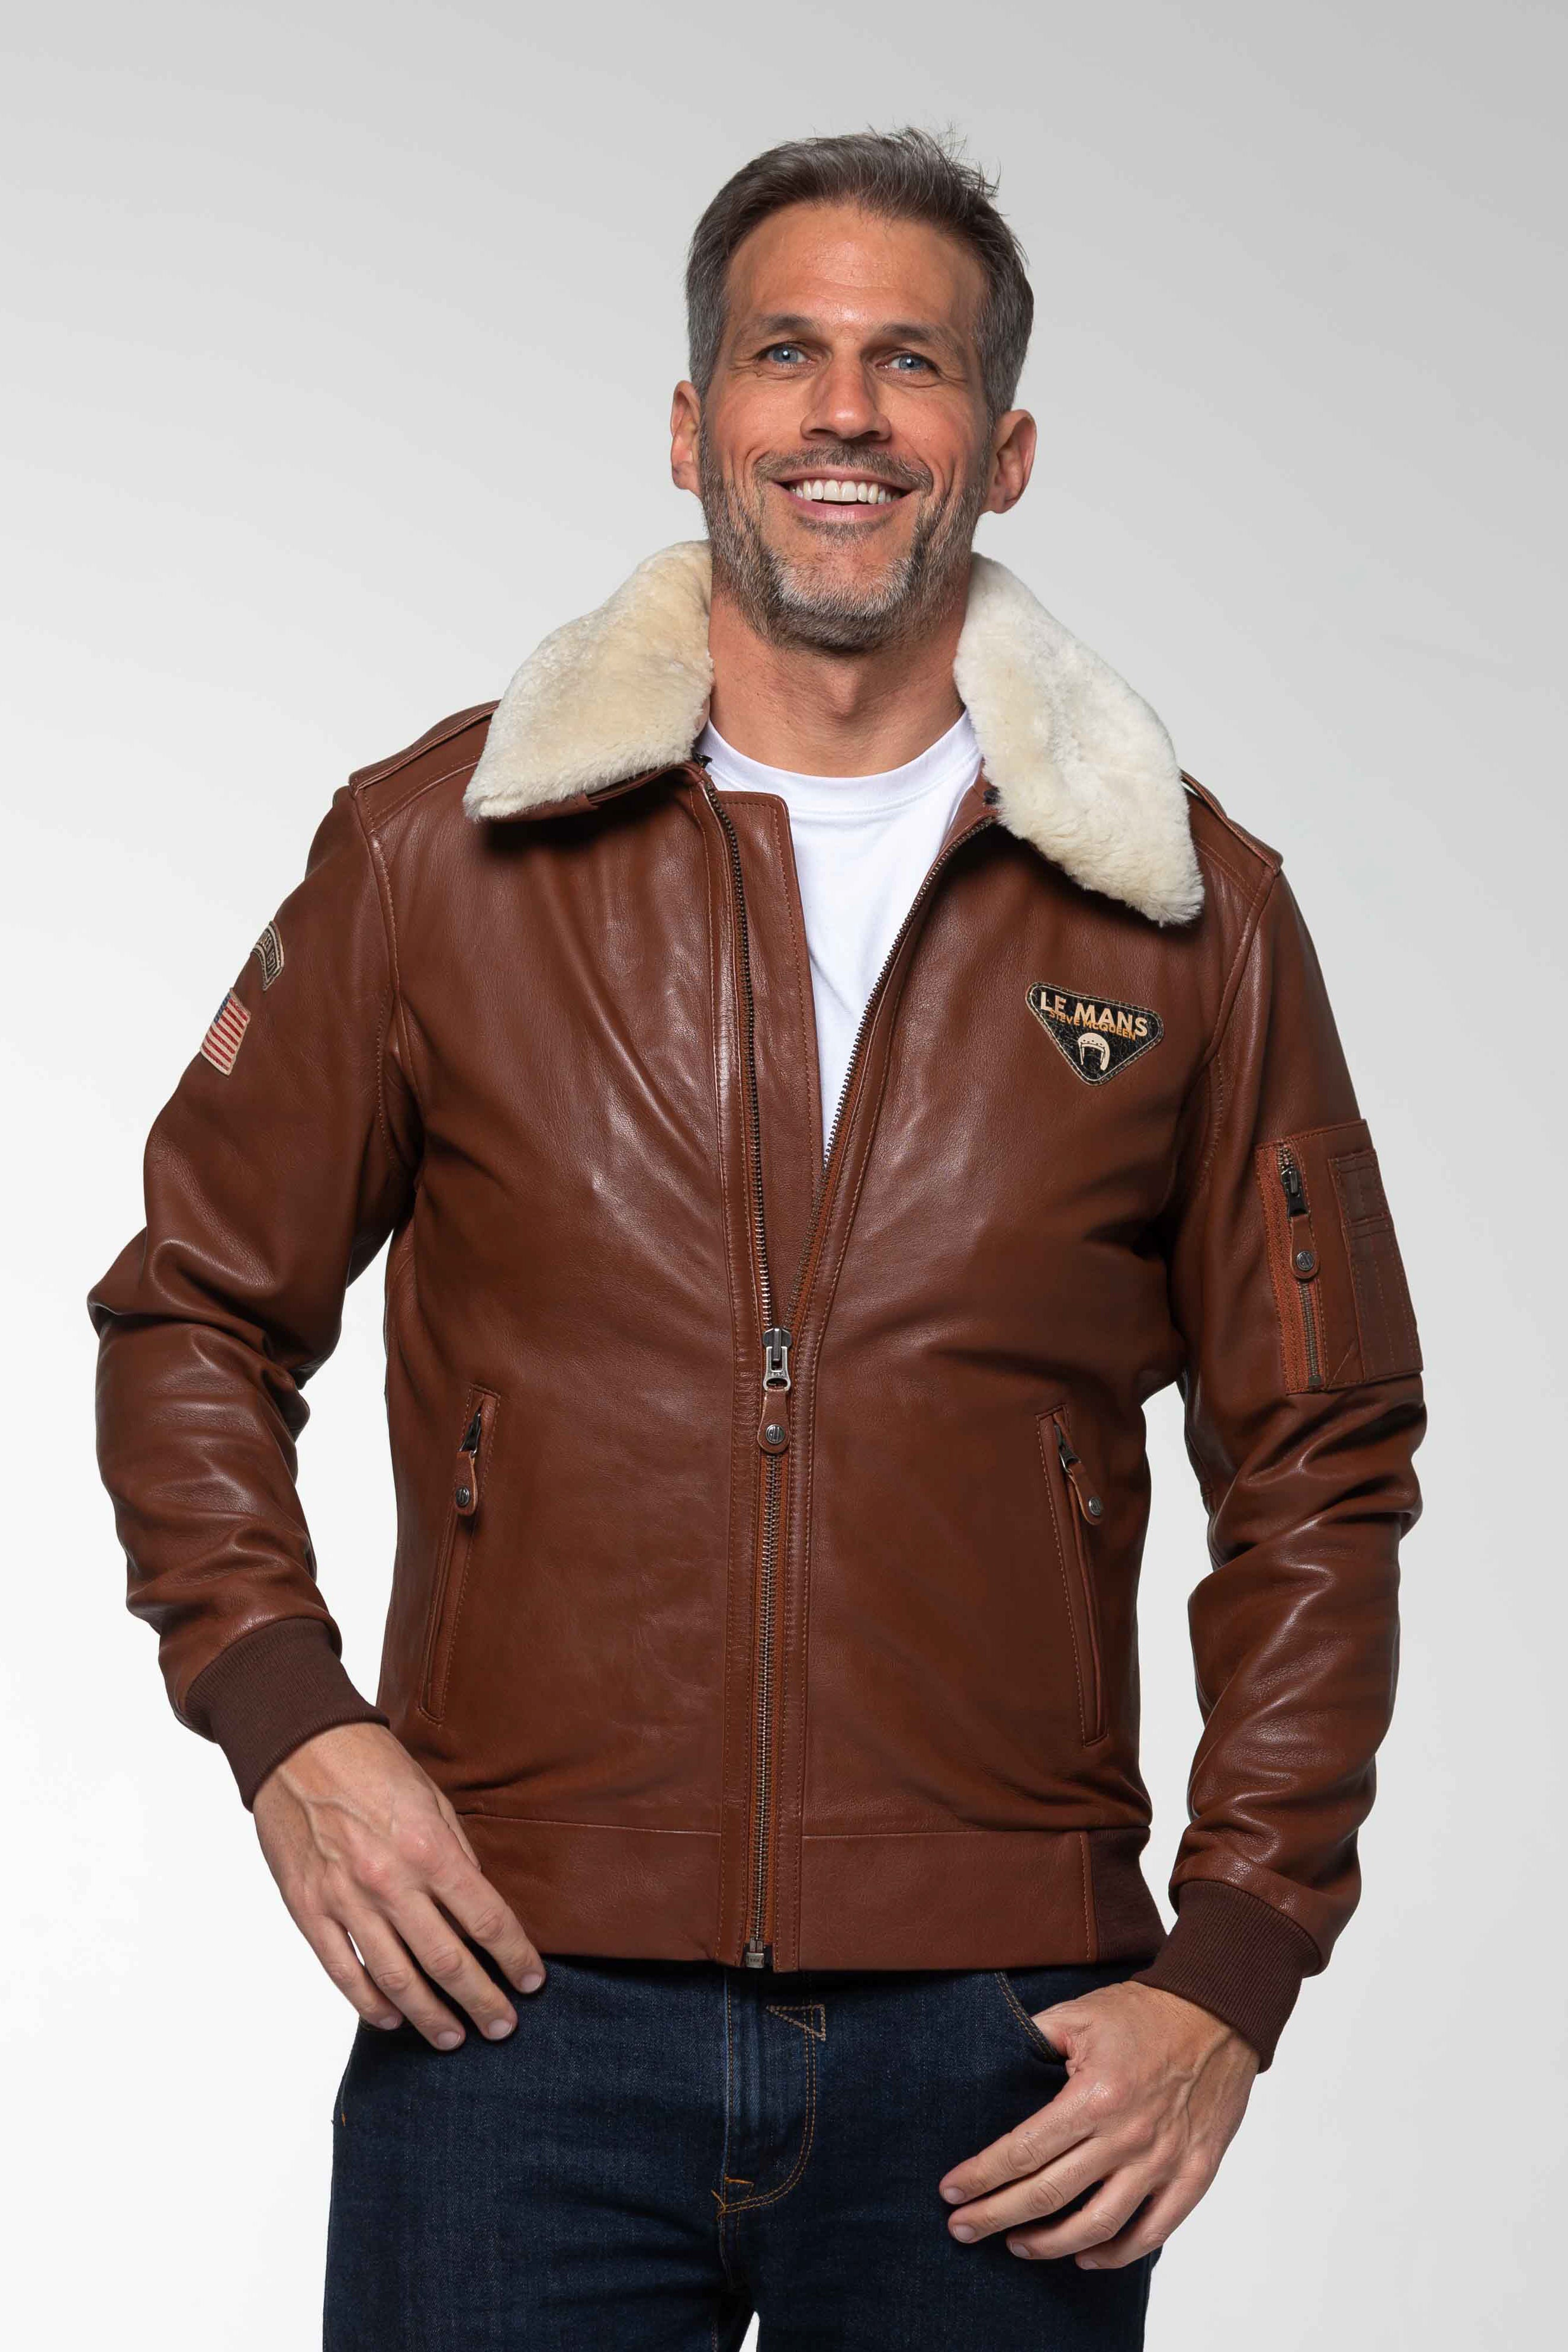 Leather jacket Steve McQueen John tortoise Man – Classic Legend Motors